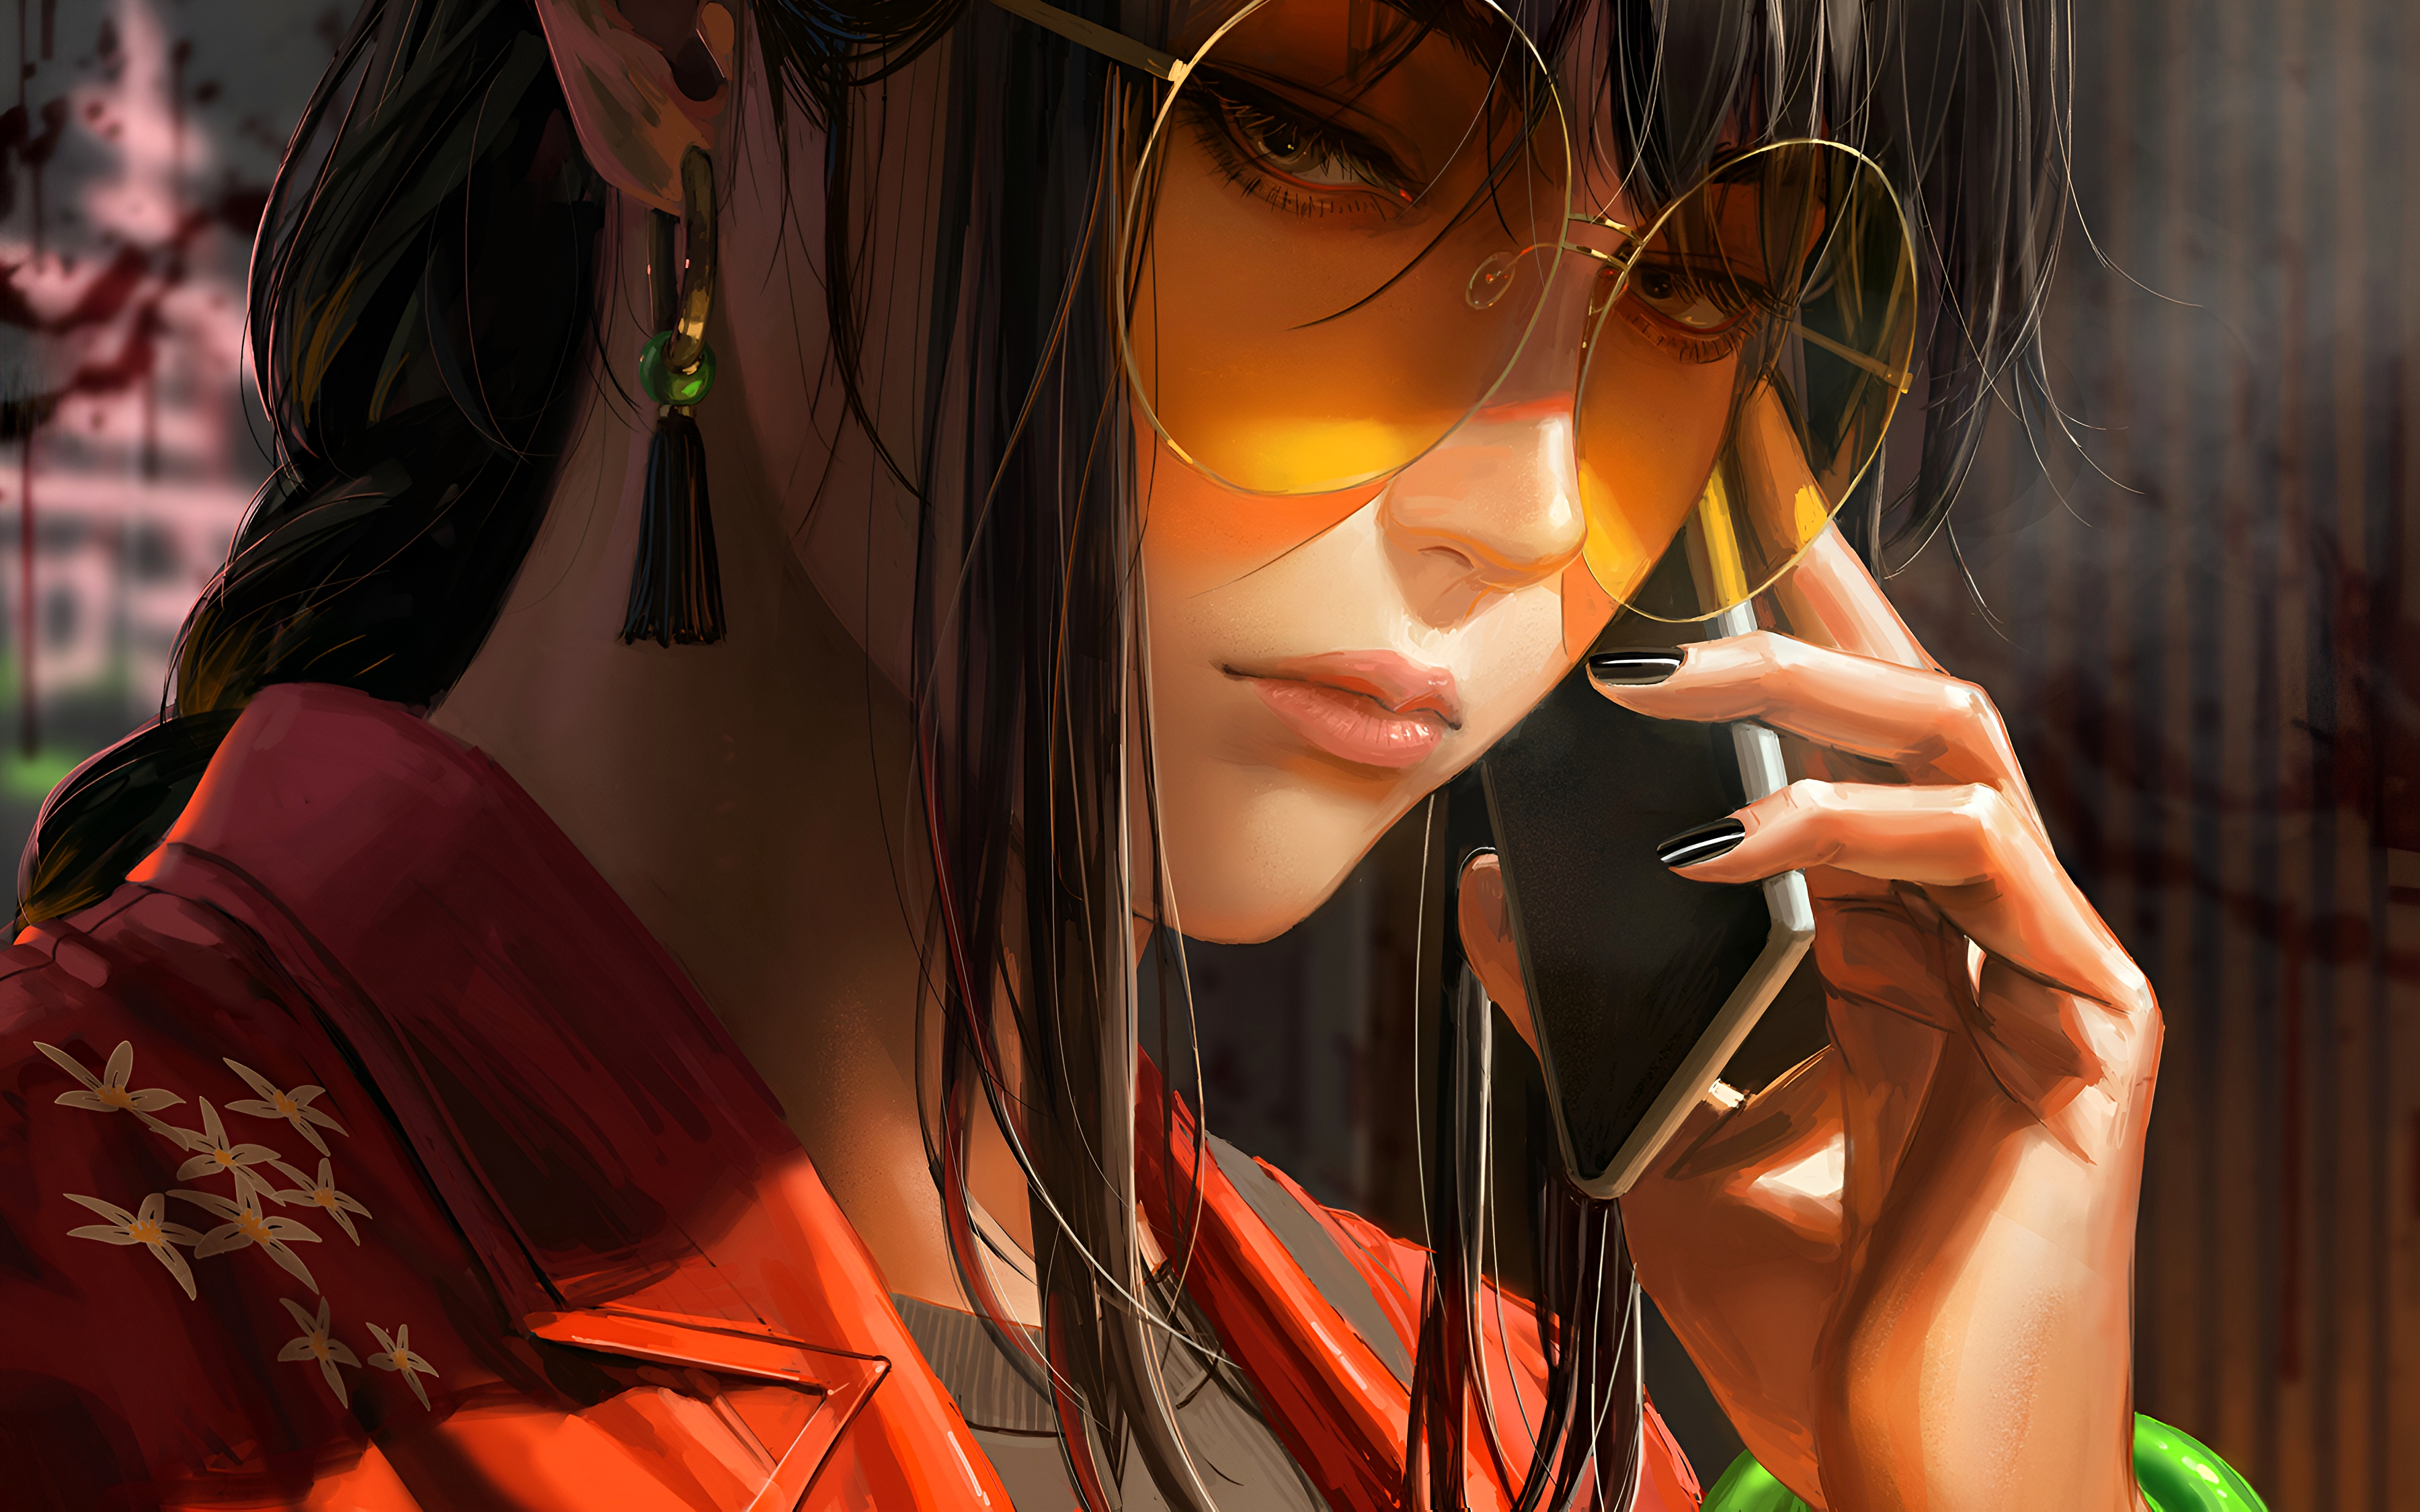 GUWEiZ Sunglasses Phone Side View Asian Digital Art Original Characters Women Face Earring Glasses 3600x2250